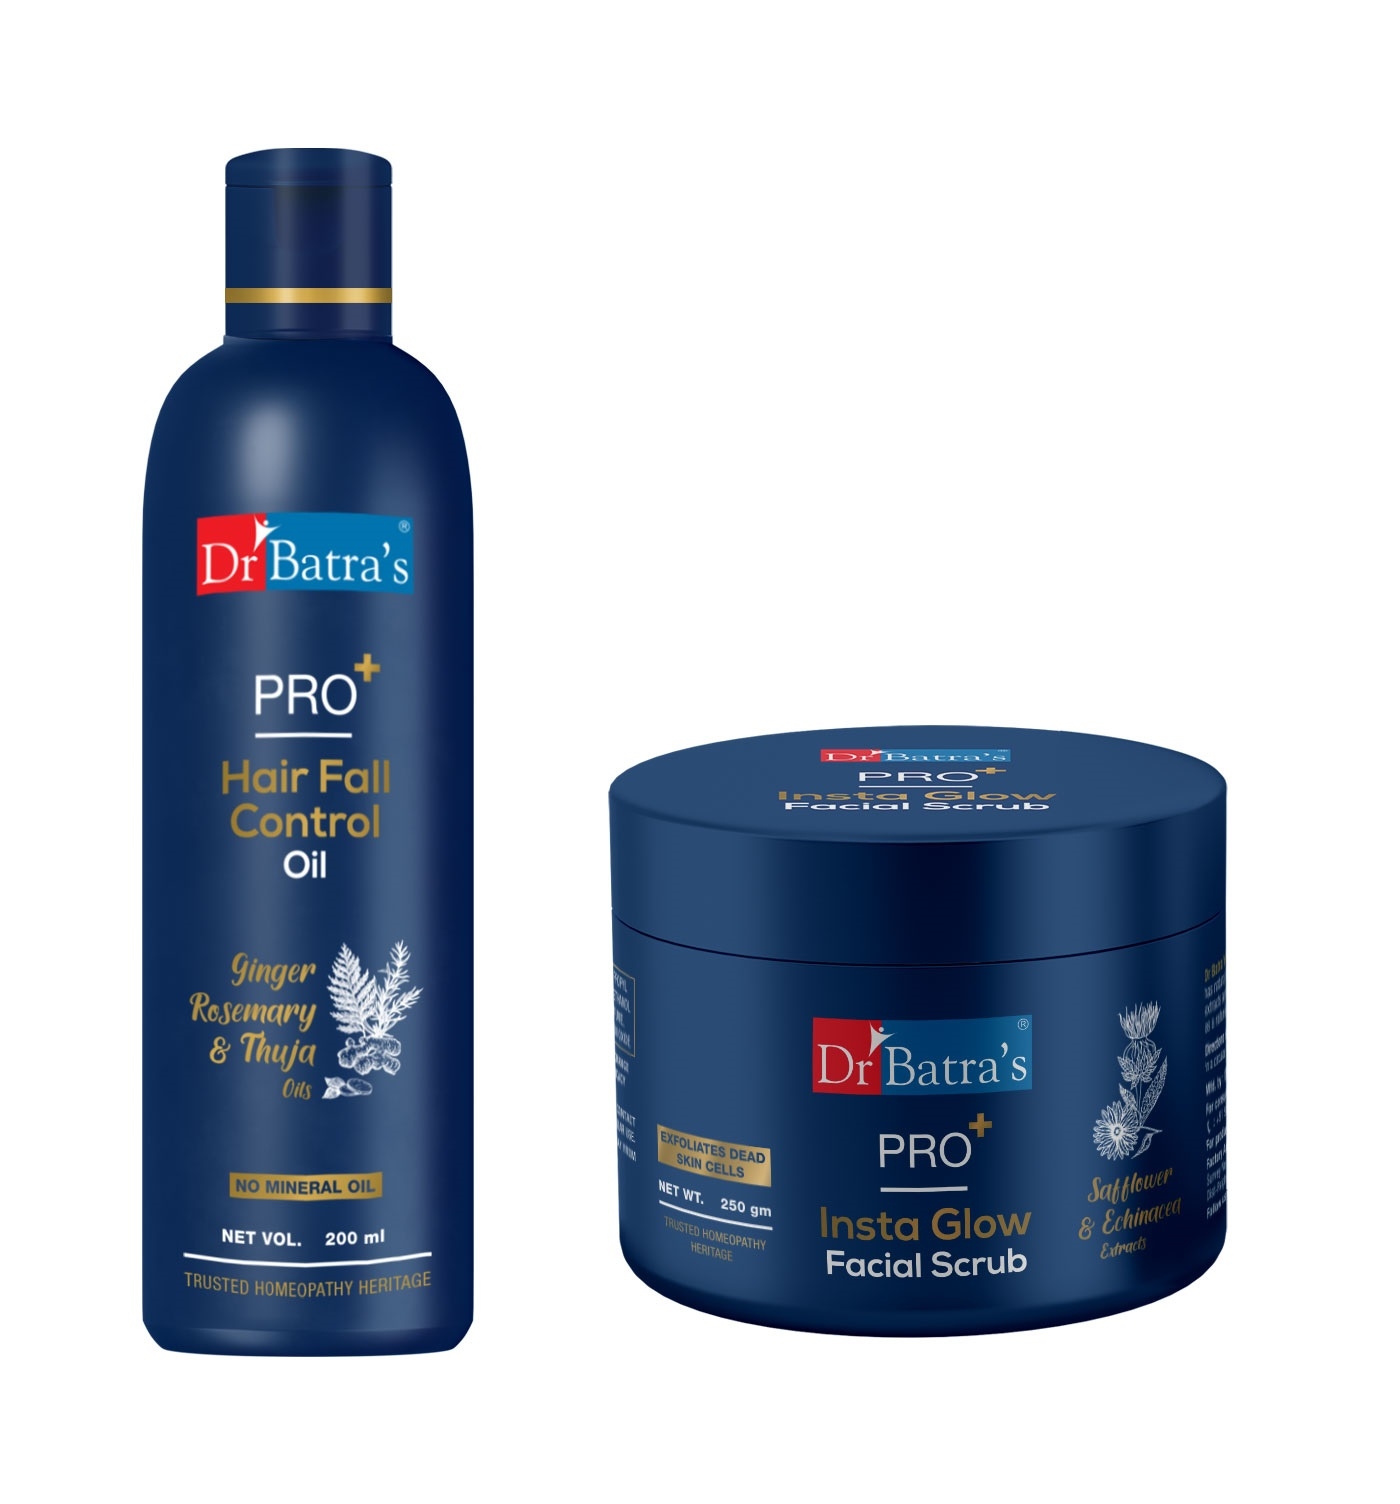 Dr Batra's | Dr Batra's PRO+ Hair Fall Control Oil -200 ml and PRO+  Insta Glow Facial Scrub-250 g 0